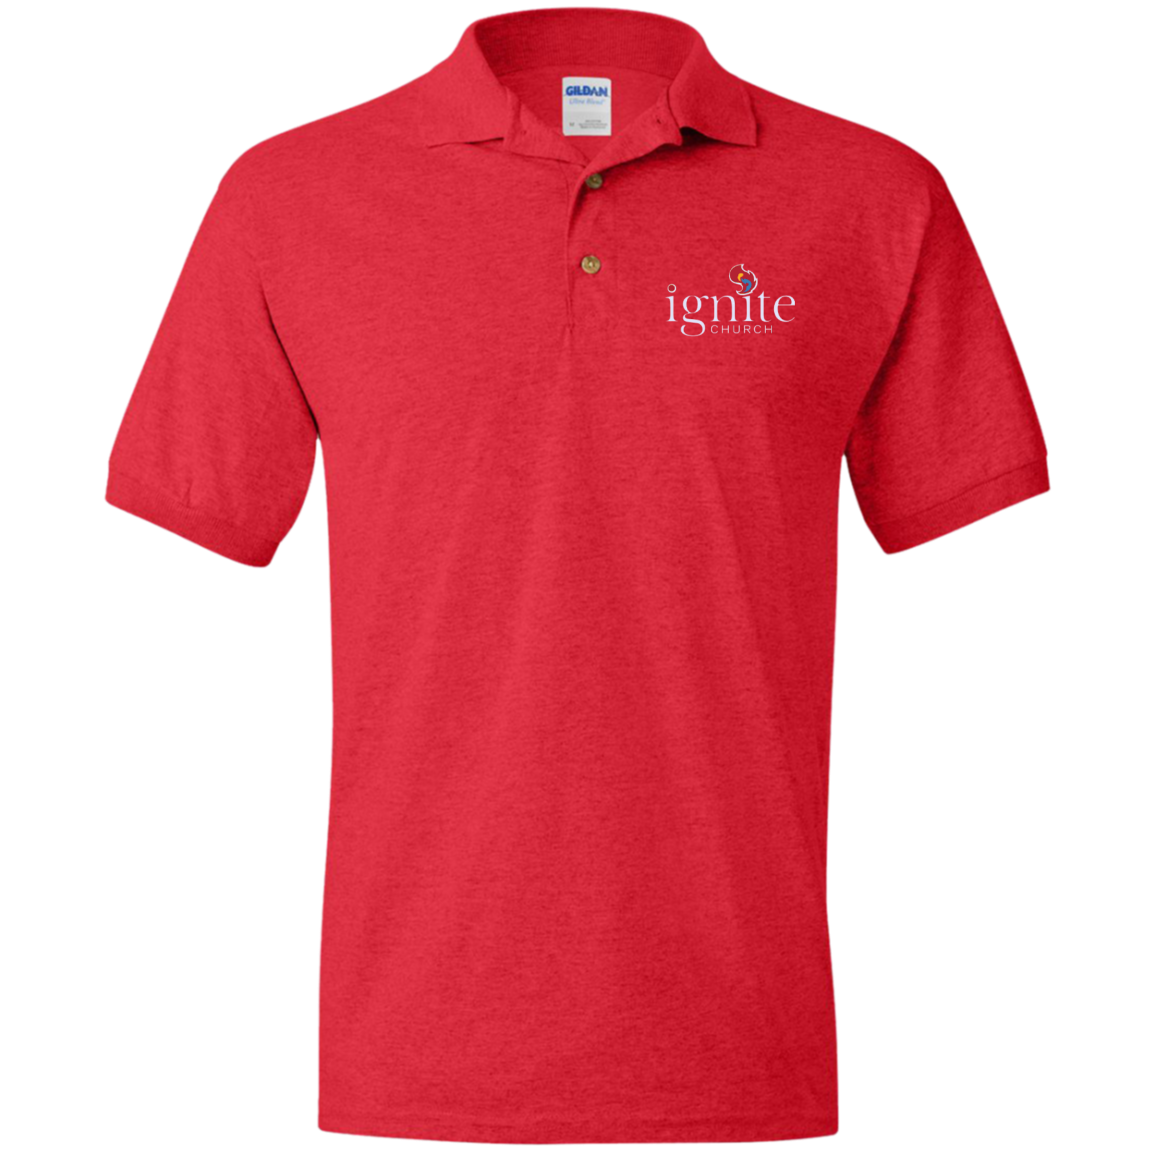 IGNITE church - Jersey Polo Shirt Unisex - Kick Merch - 7